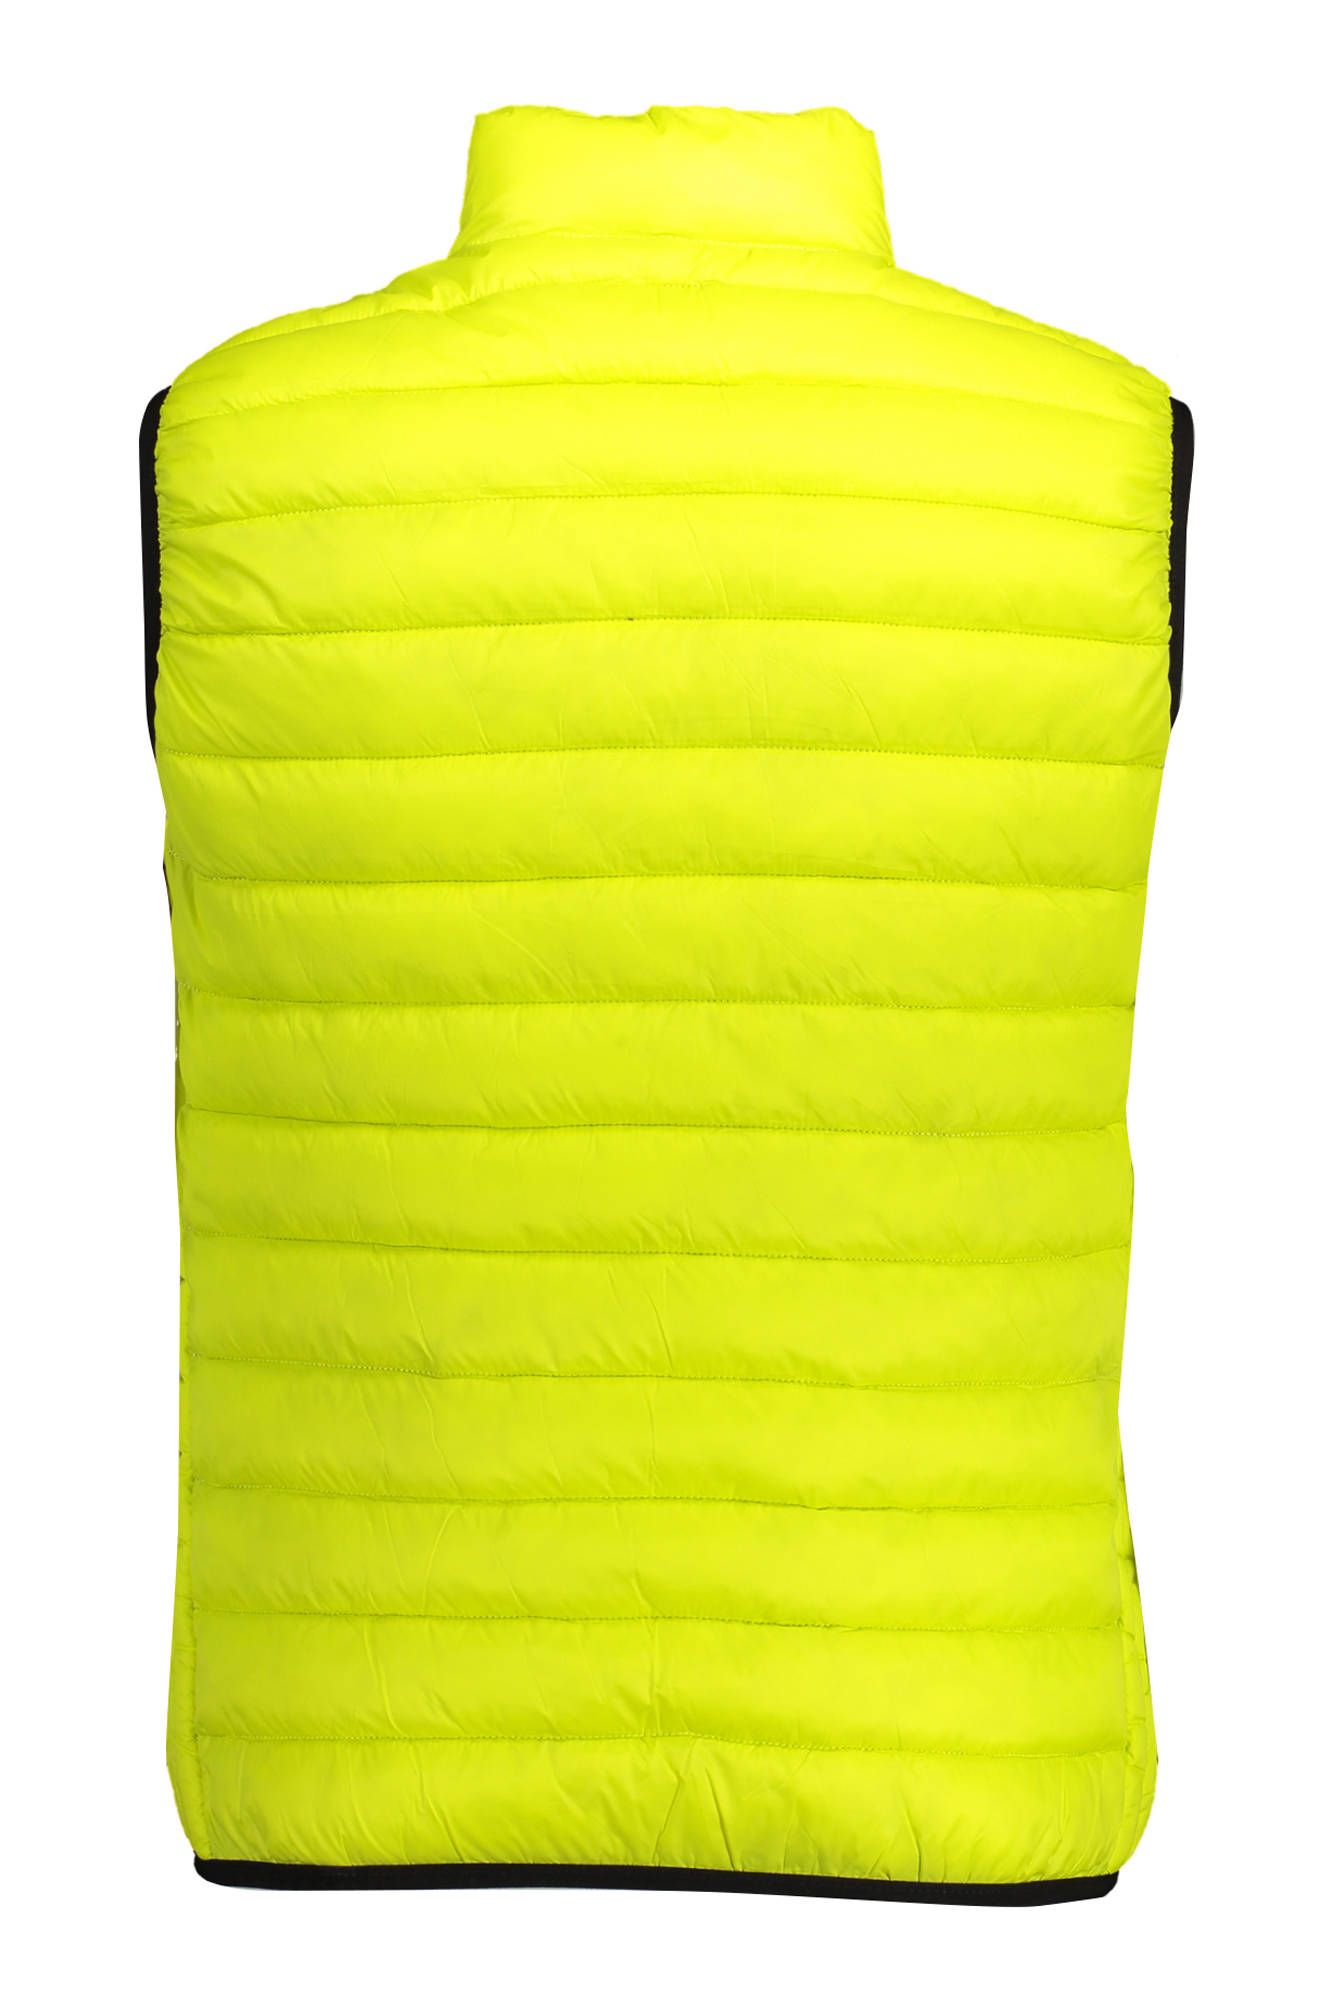 U.S. POLO ASSN. Sleek Reversible Sleeveless Nylon Jacket